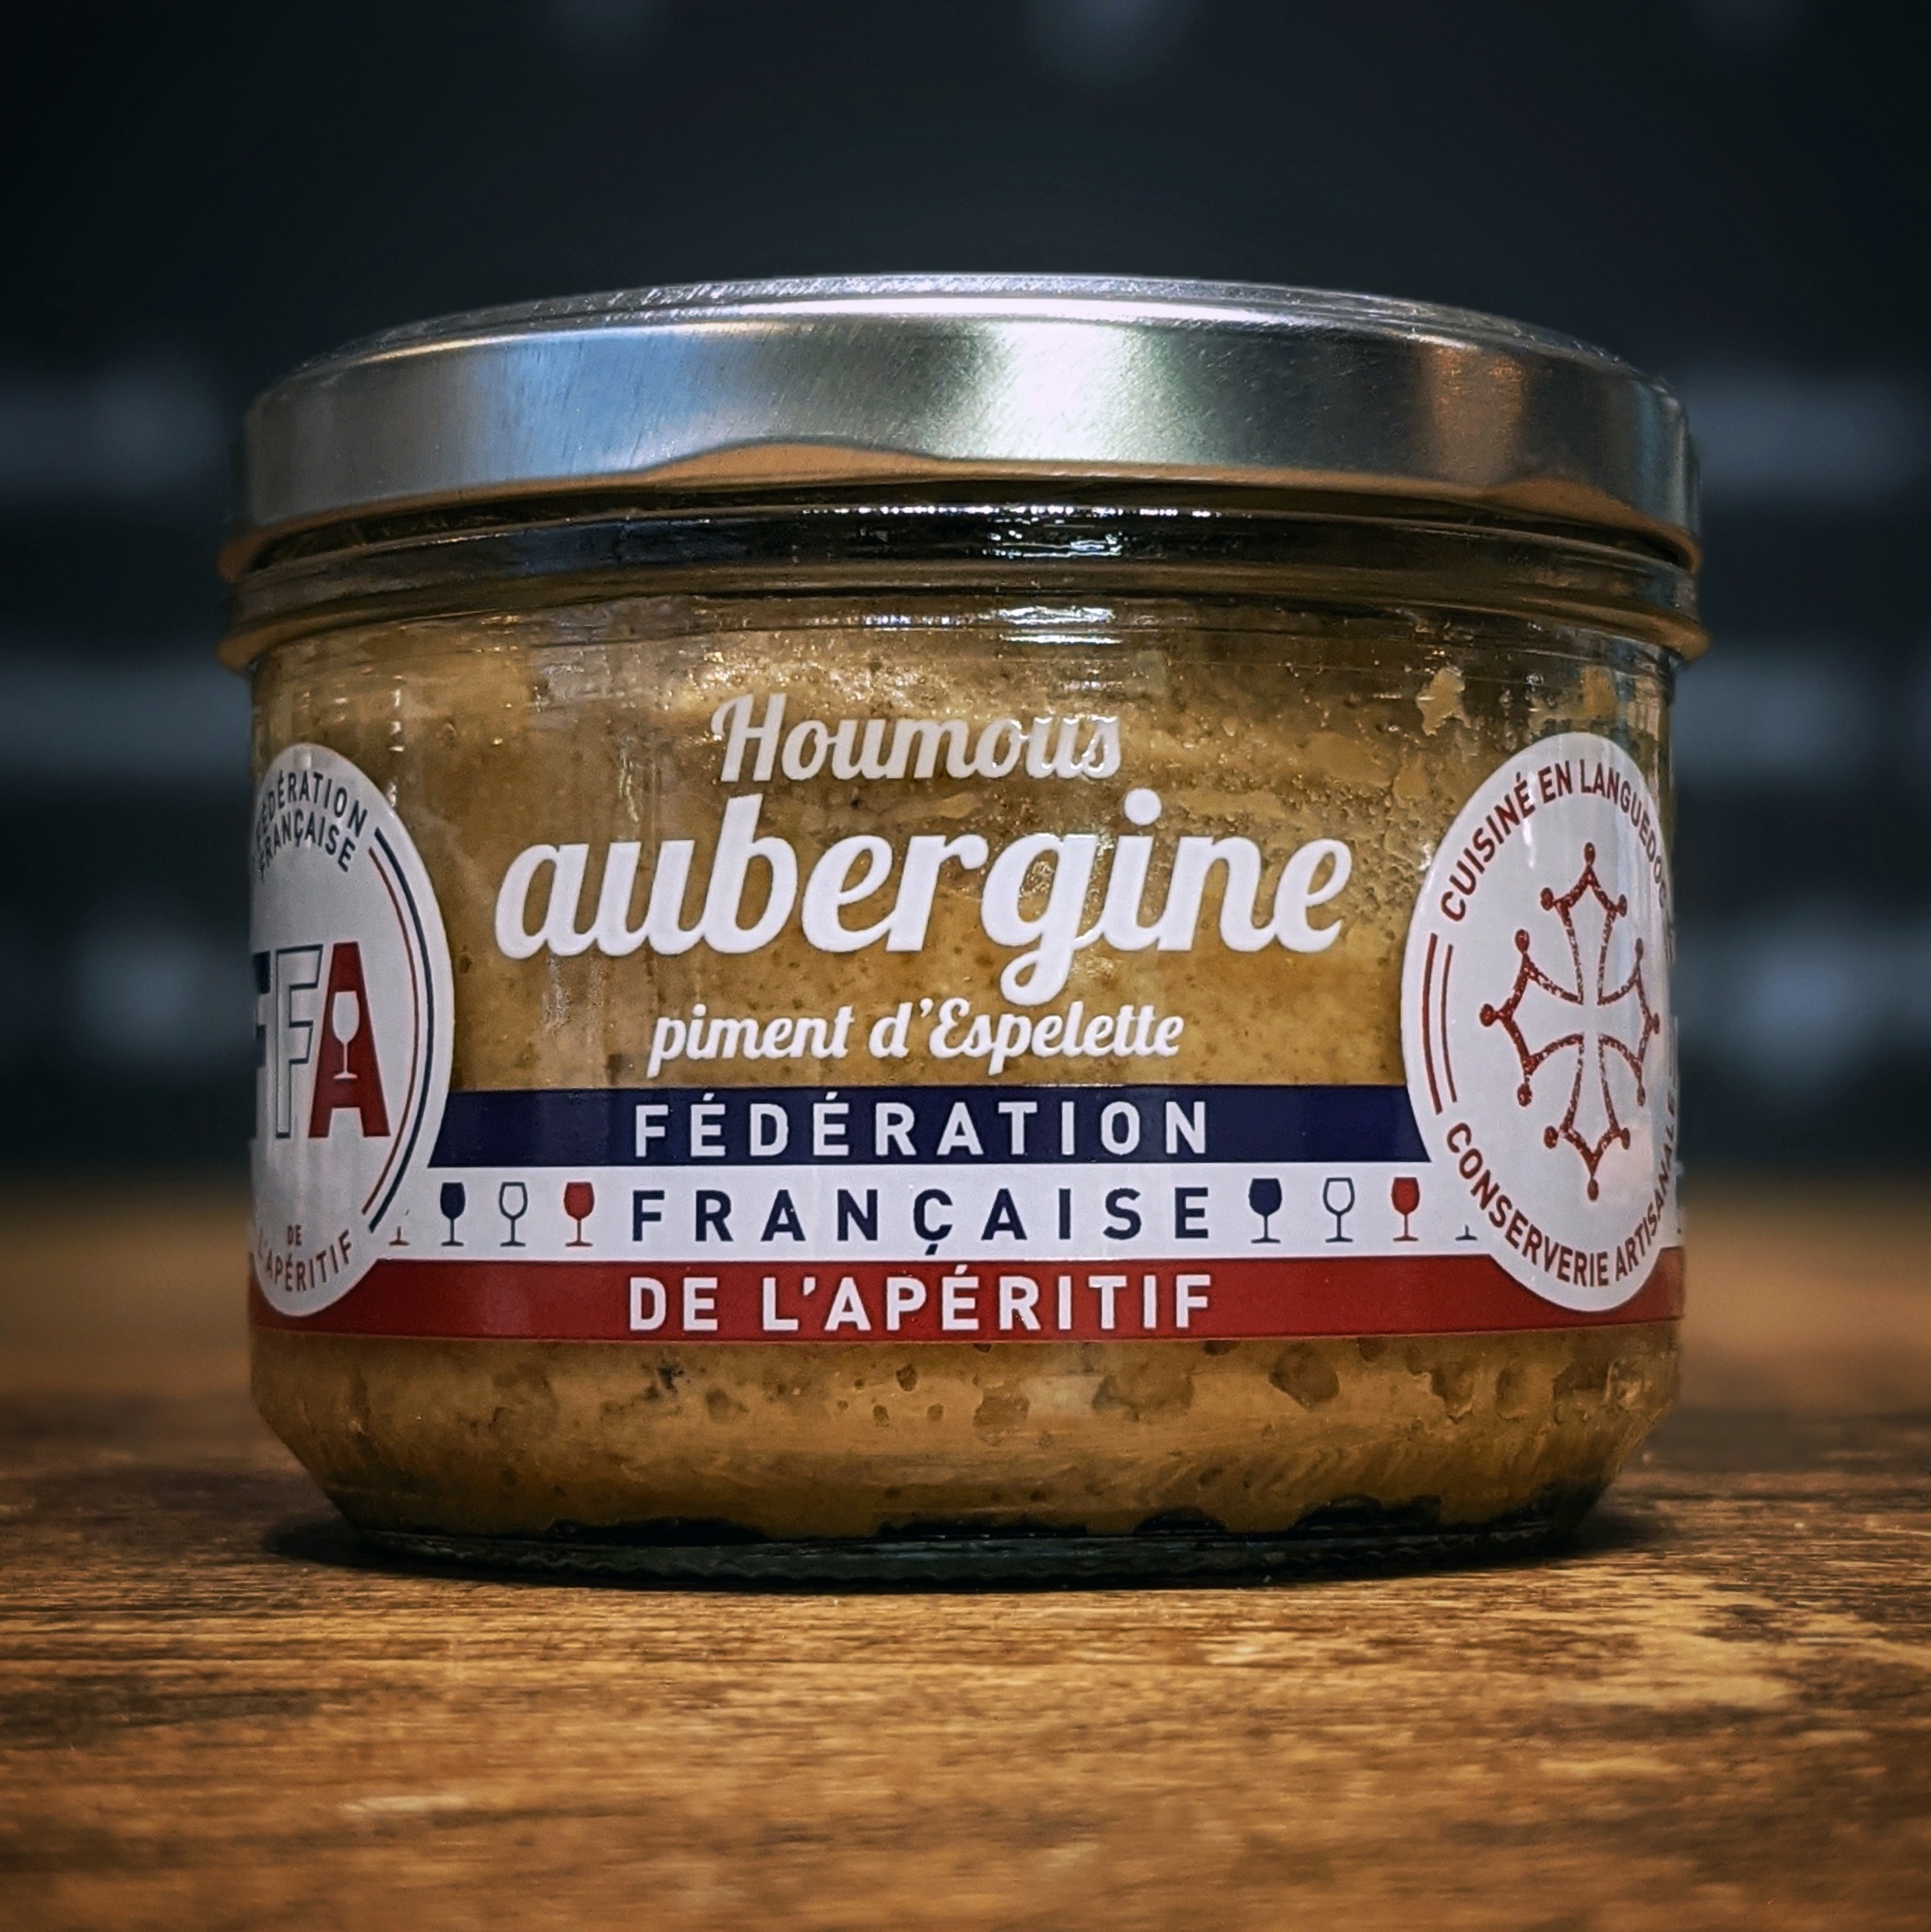 houmous-d-aubergine-ffa-federation-francaise-de-l-apero-arles-caviste-cave-a-vin